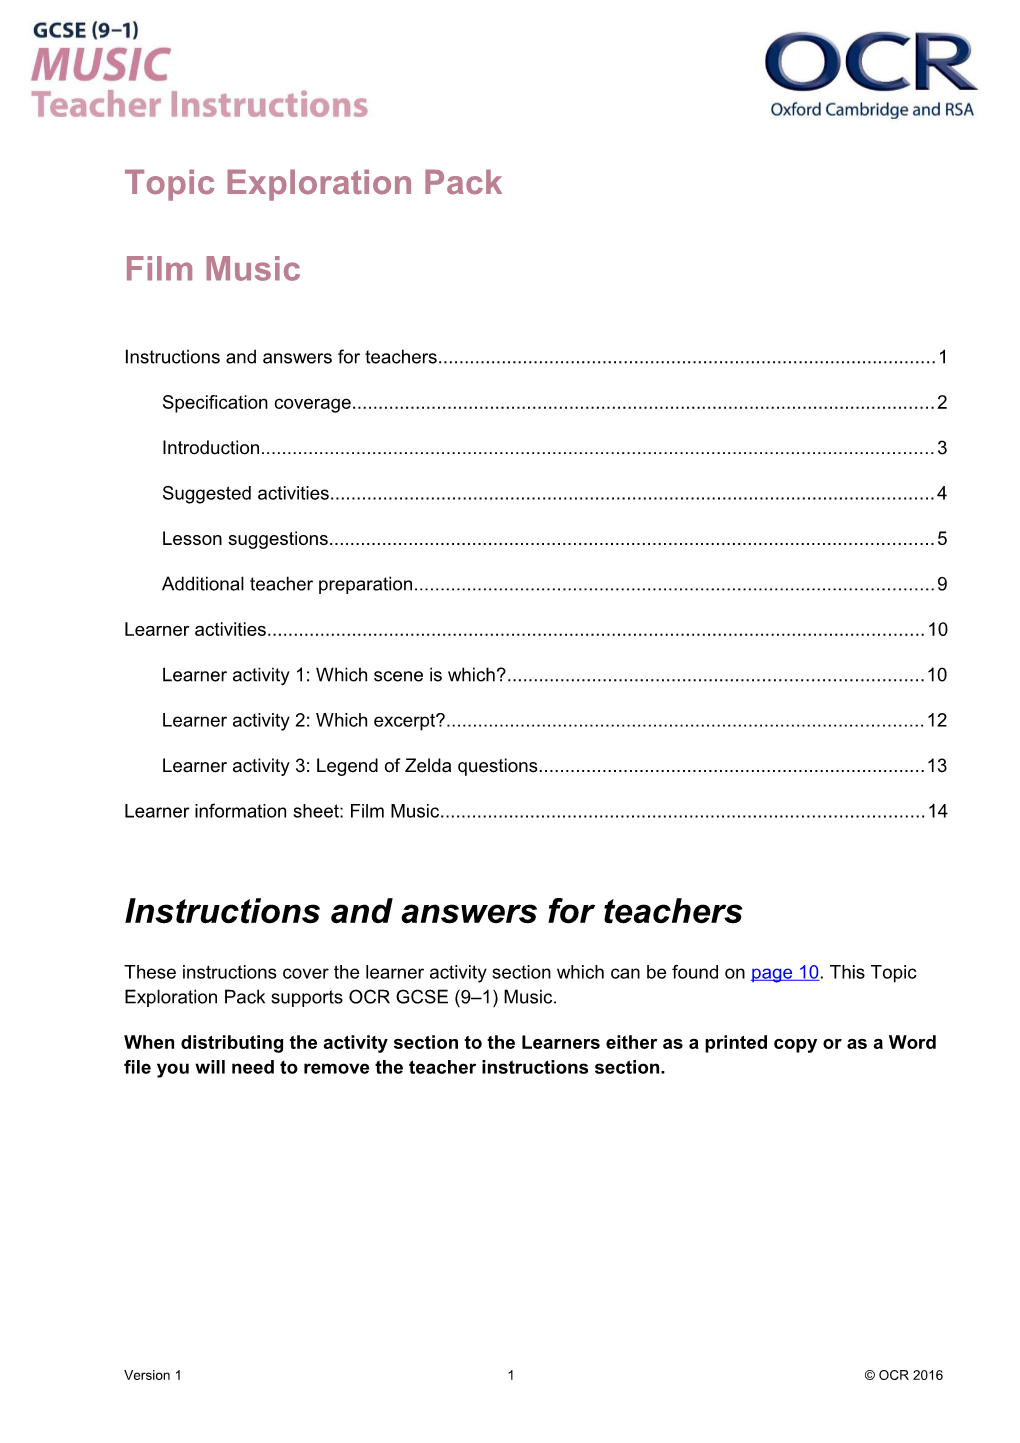 OCR GCSE (9-1) Music Topic Exploration Pack - Film Music